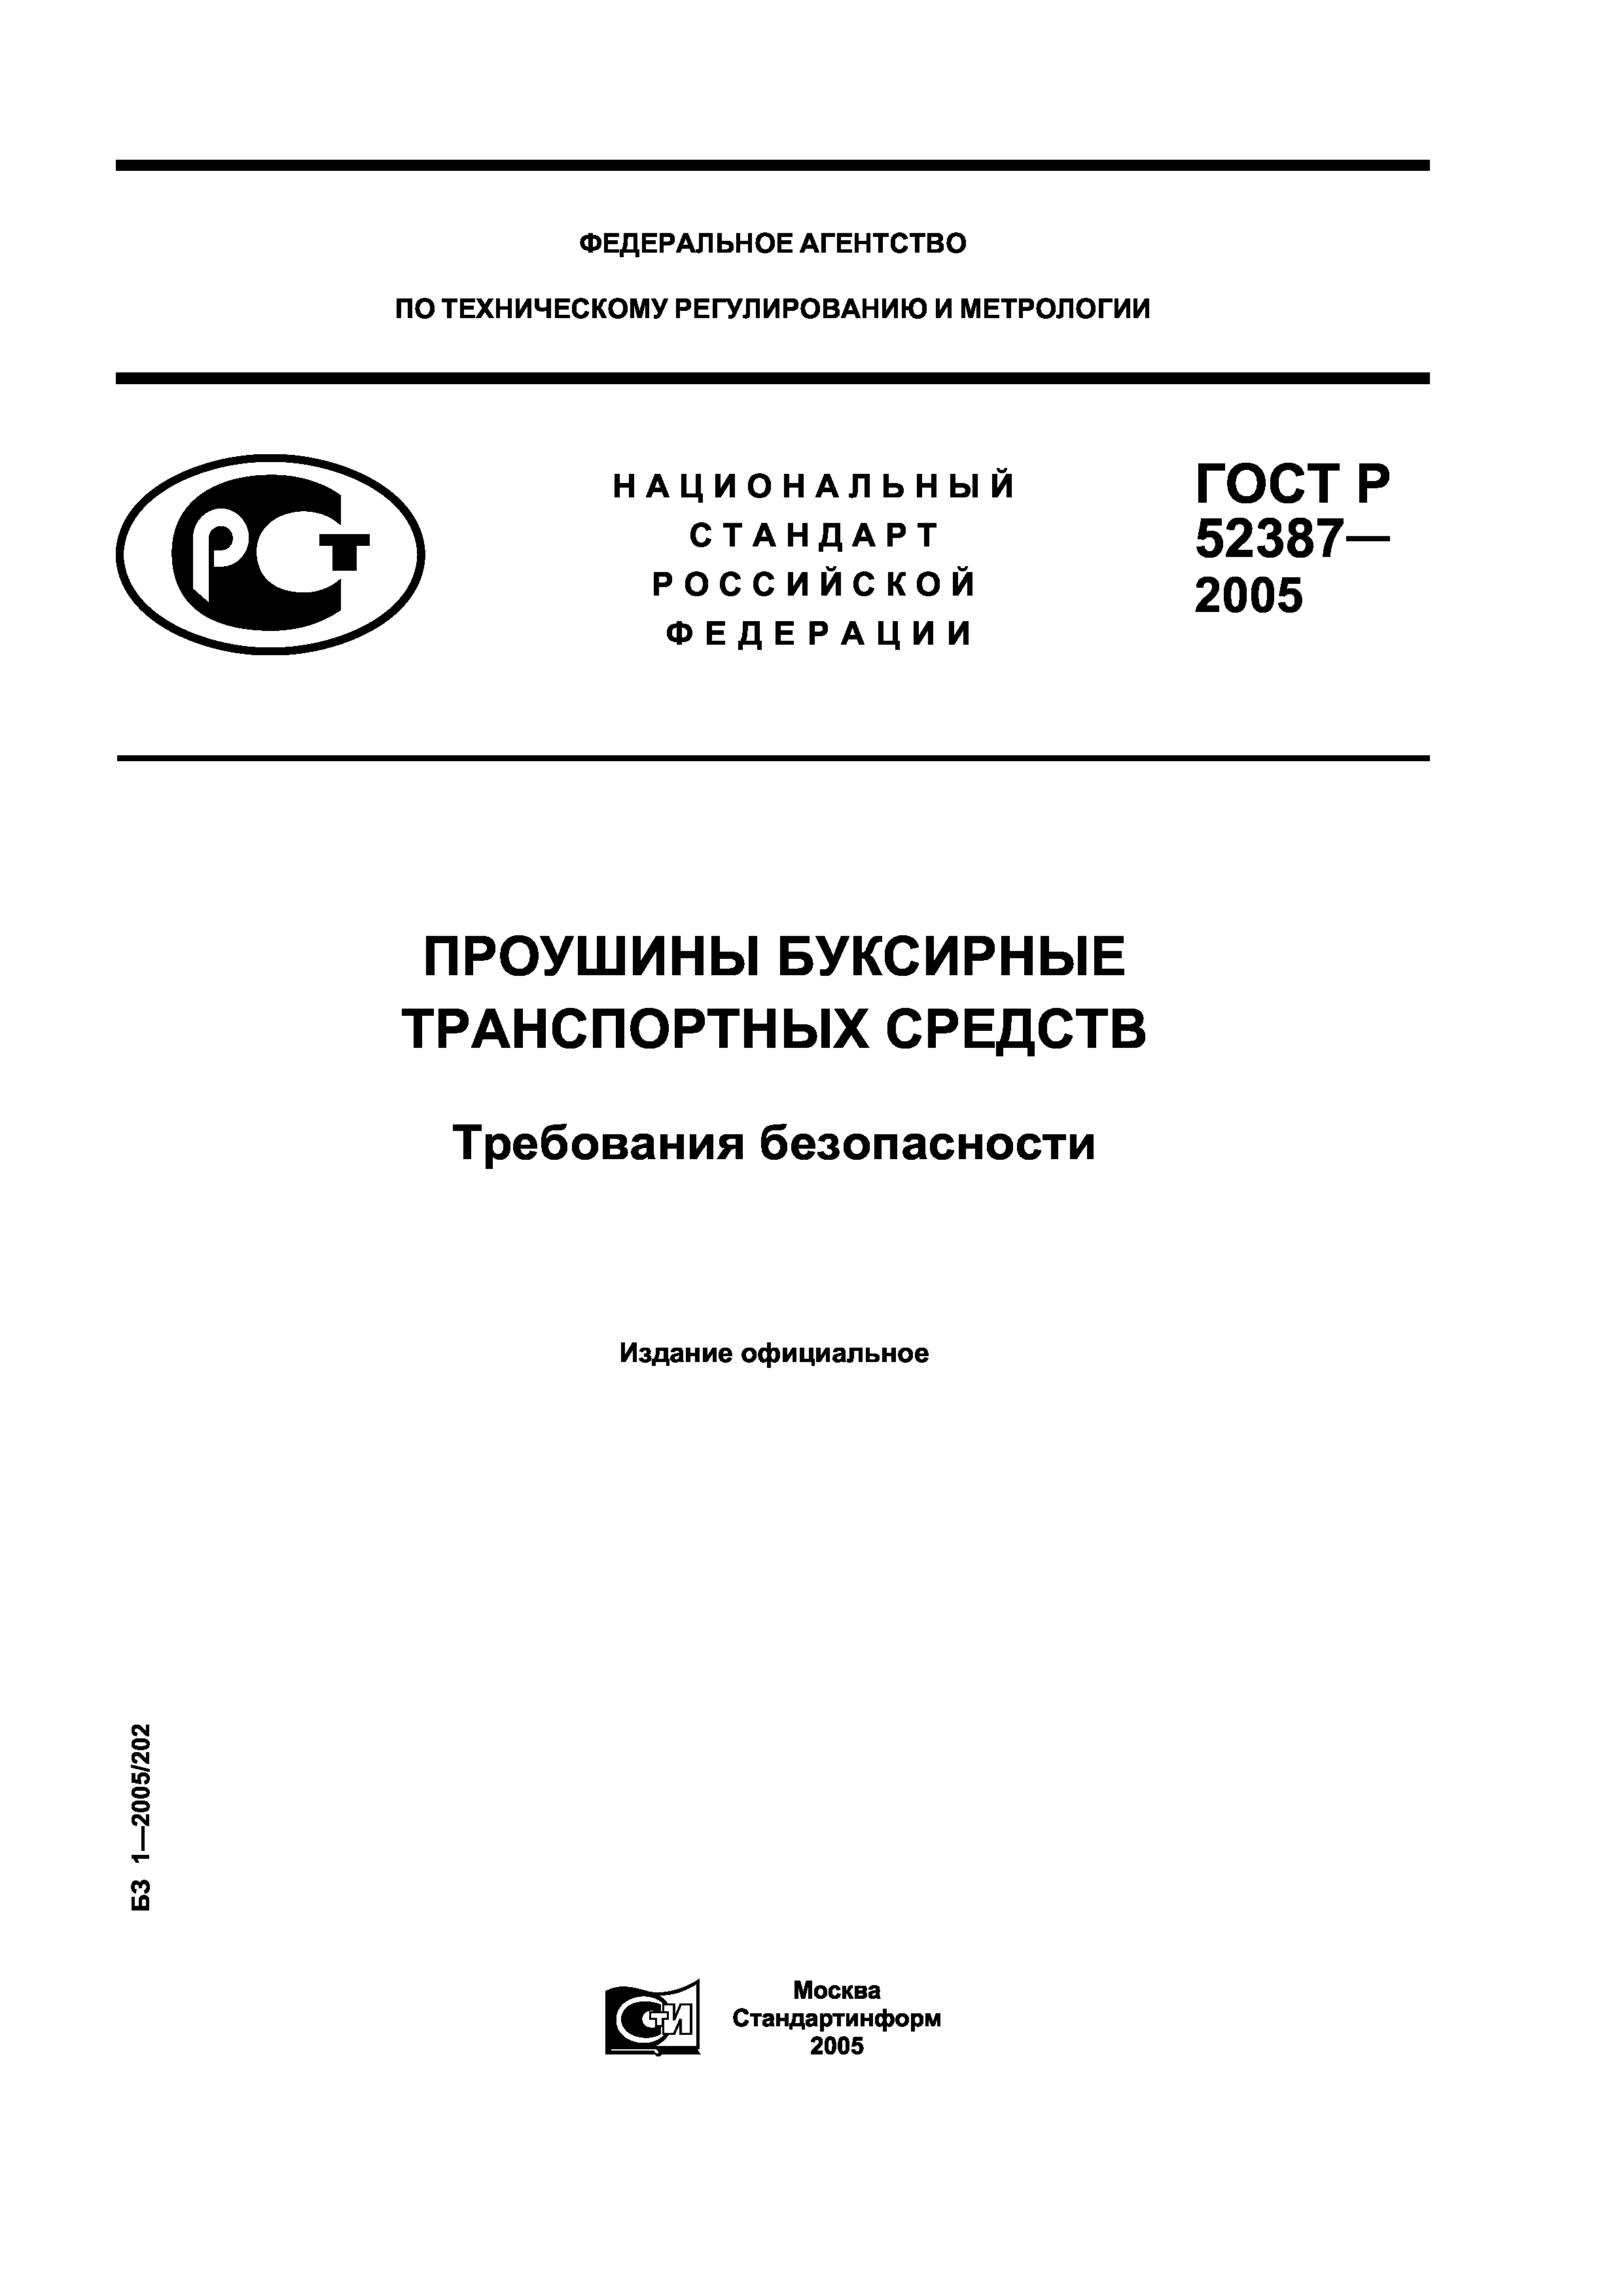 ГОСТ Р 52387-2005